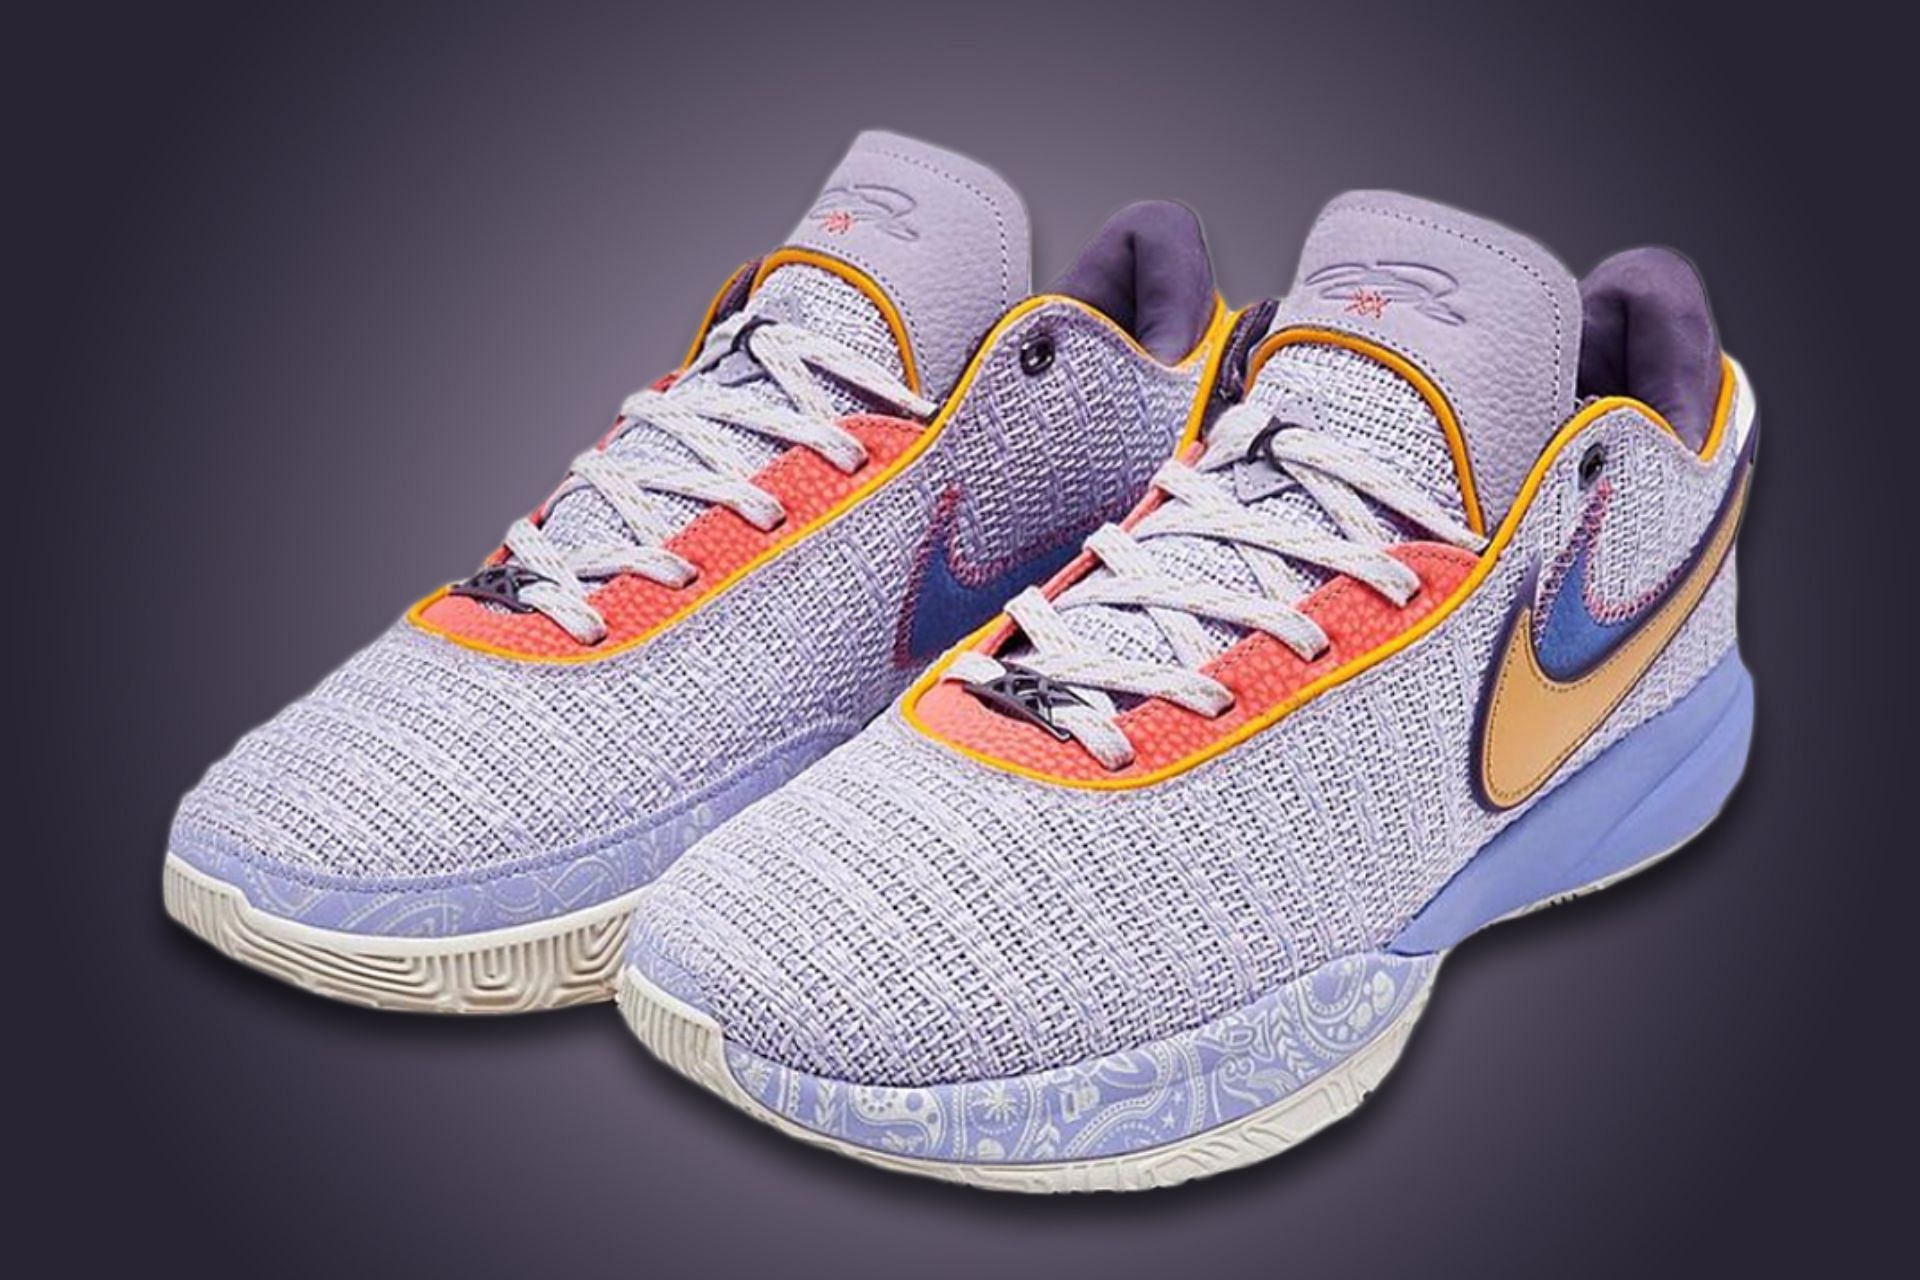 Nike Lebron 20 Violet Frost colorway (Image via Nike)